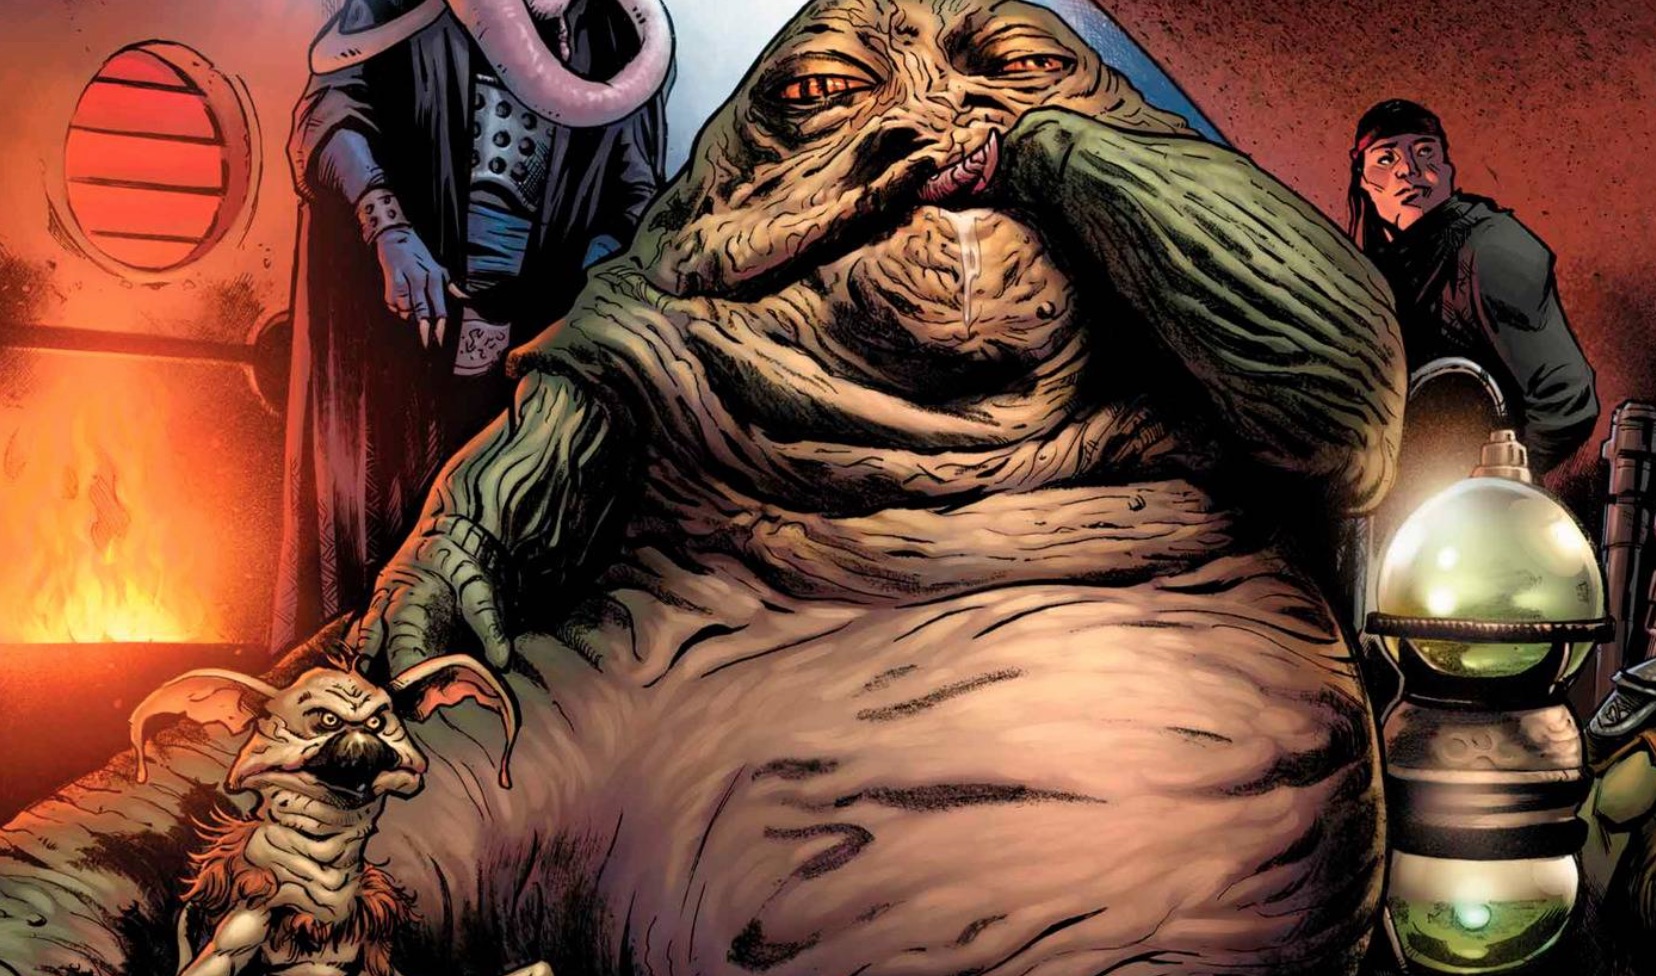  'Star Wars: Return of the Jedi' 40th anniversary comics honor Jabba the Hutt and Ewoks 